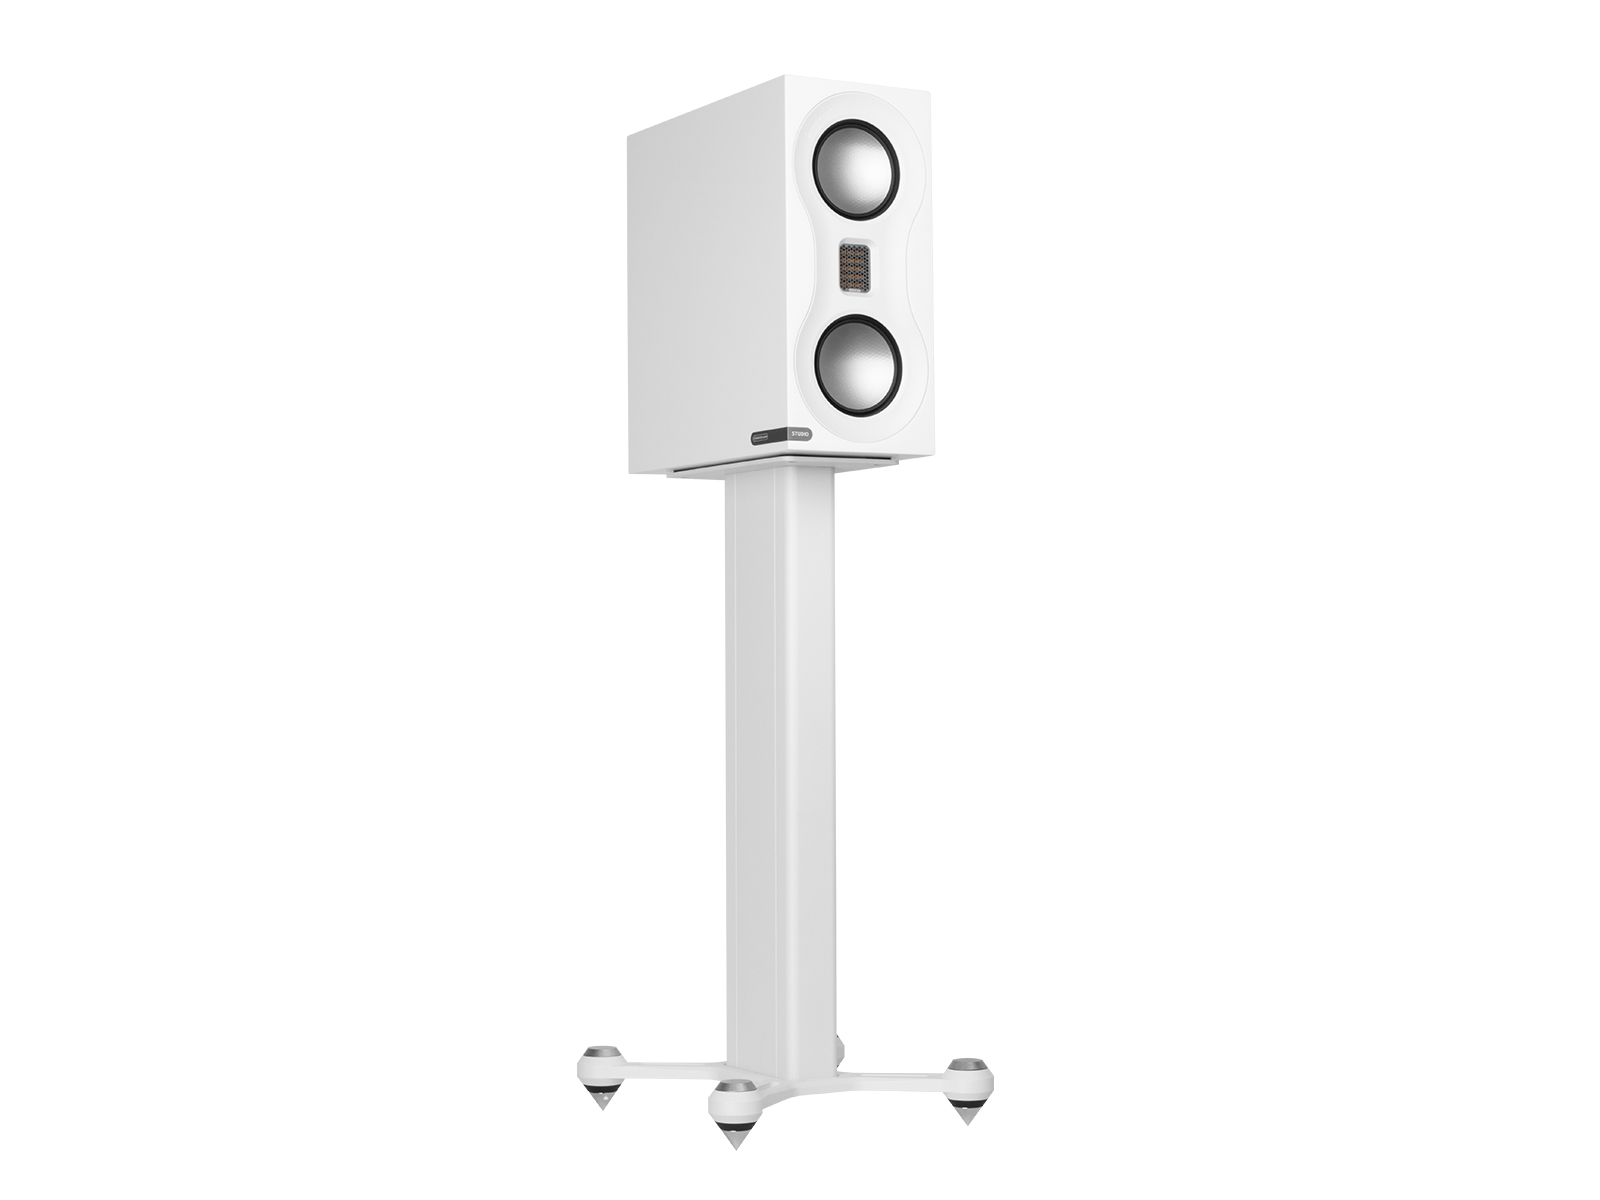 Speaker STAND, white finish with a white Studio speaker.